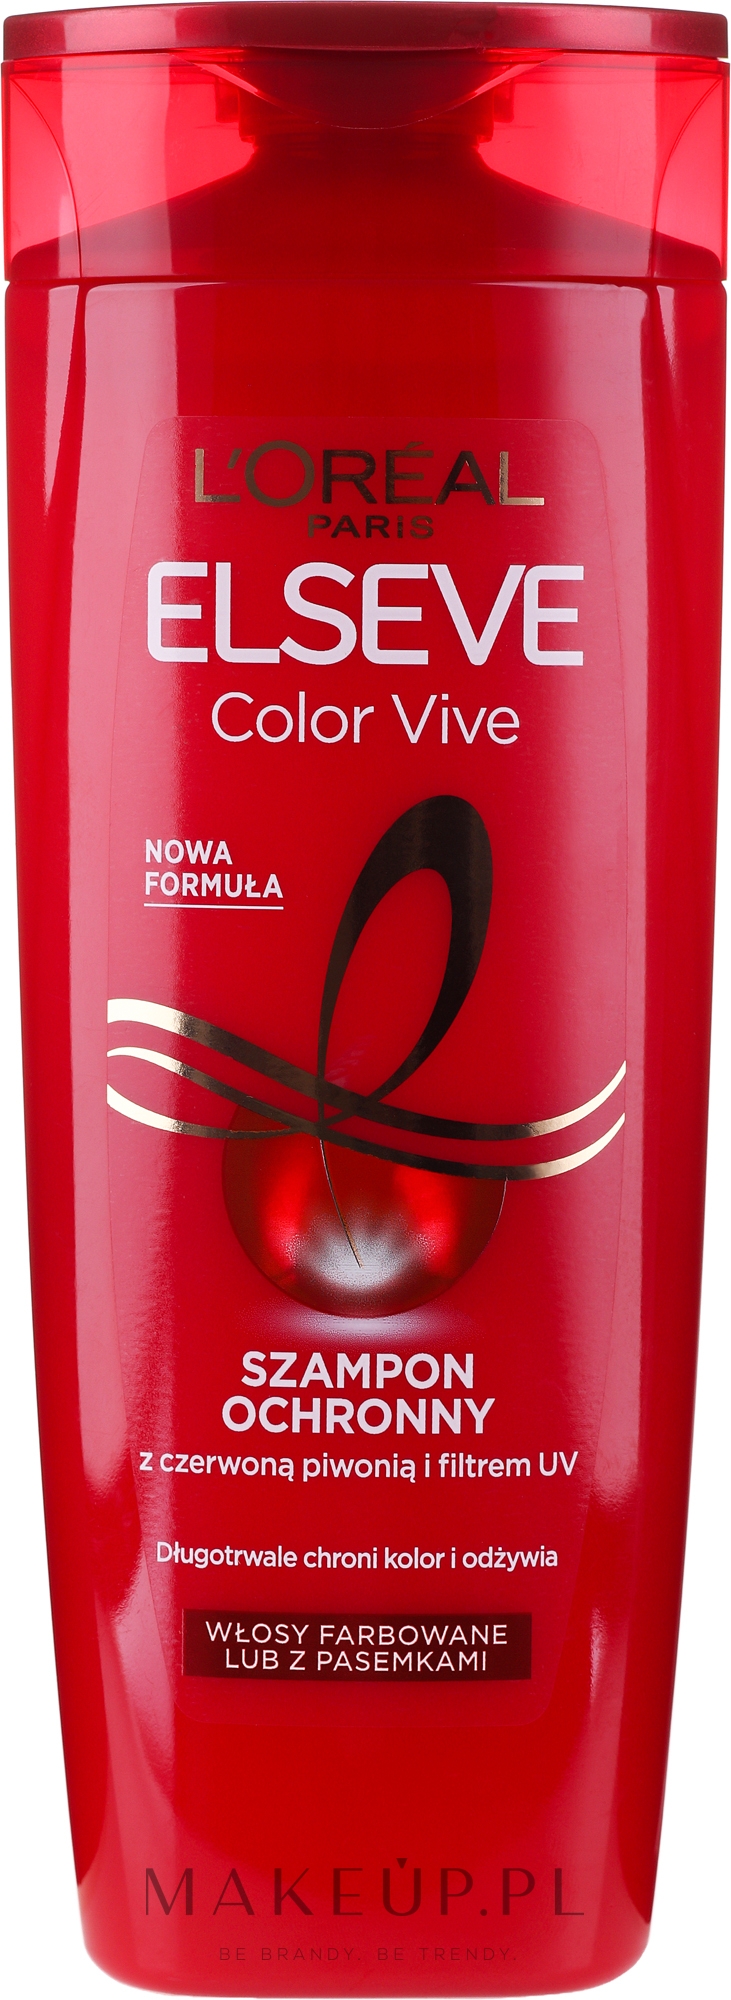 elseve szampon wlosy farbowane sklad